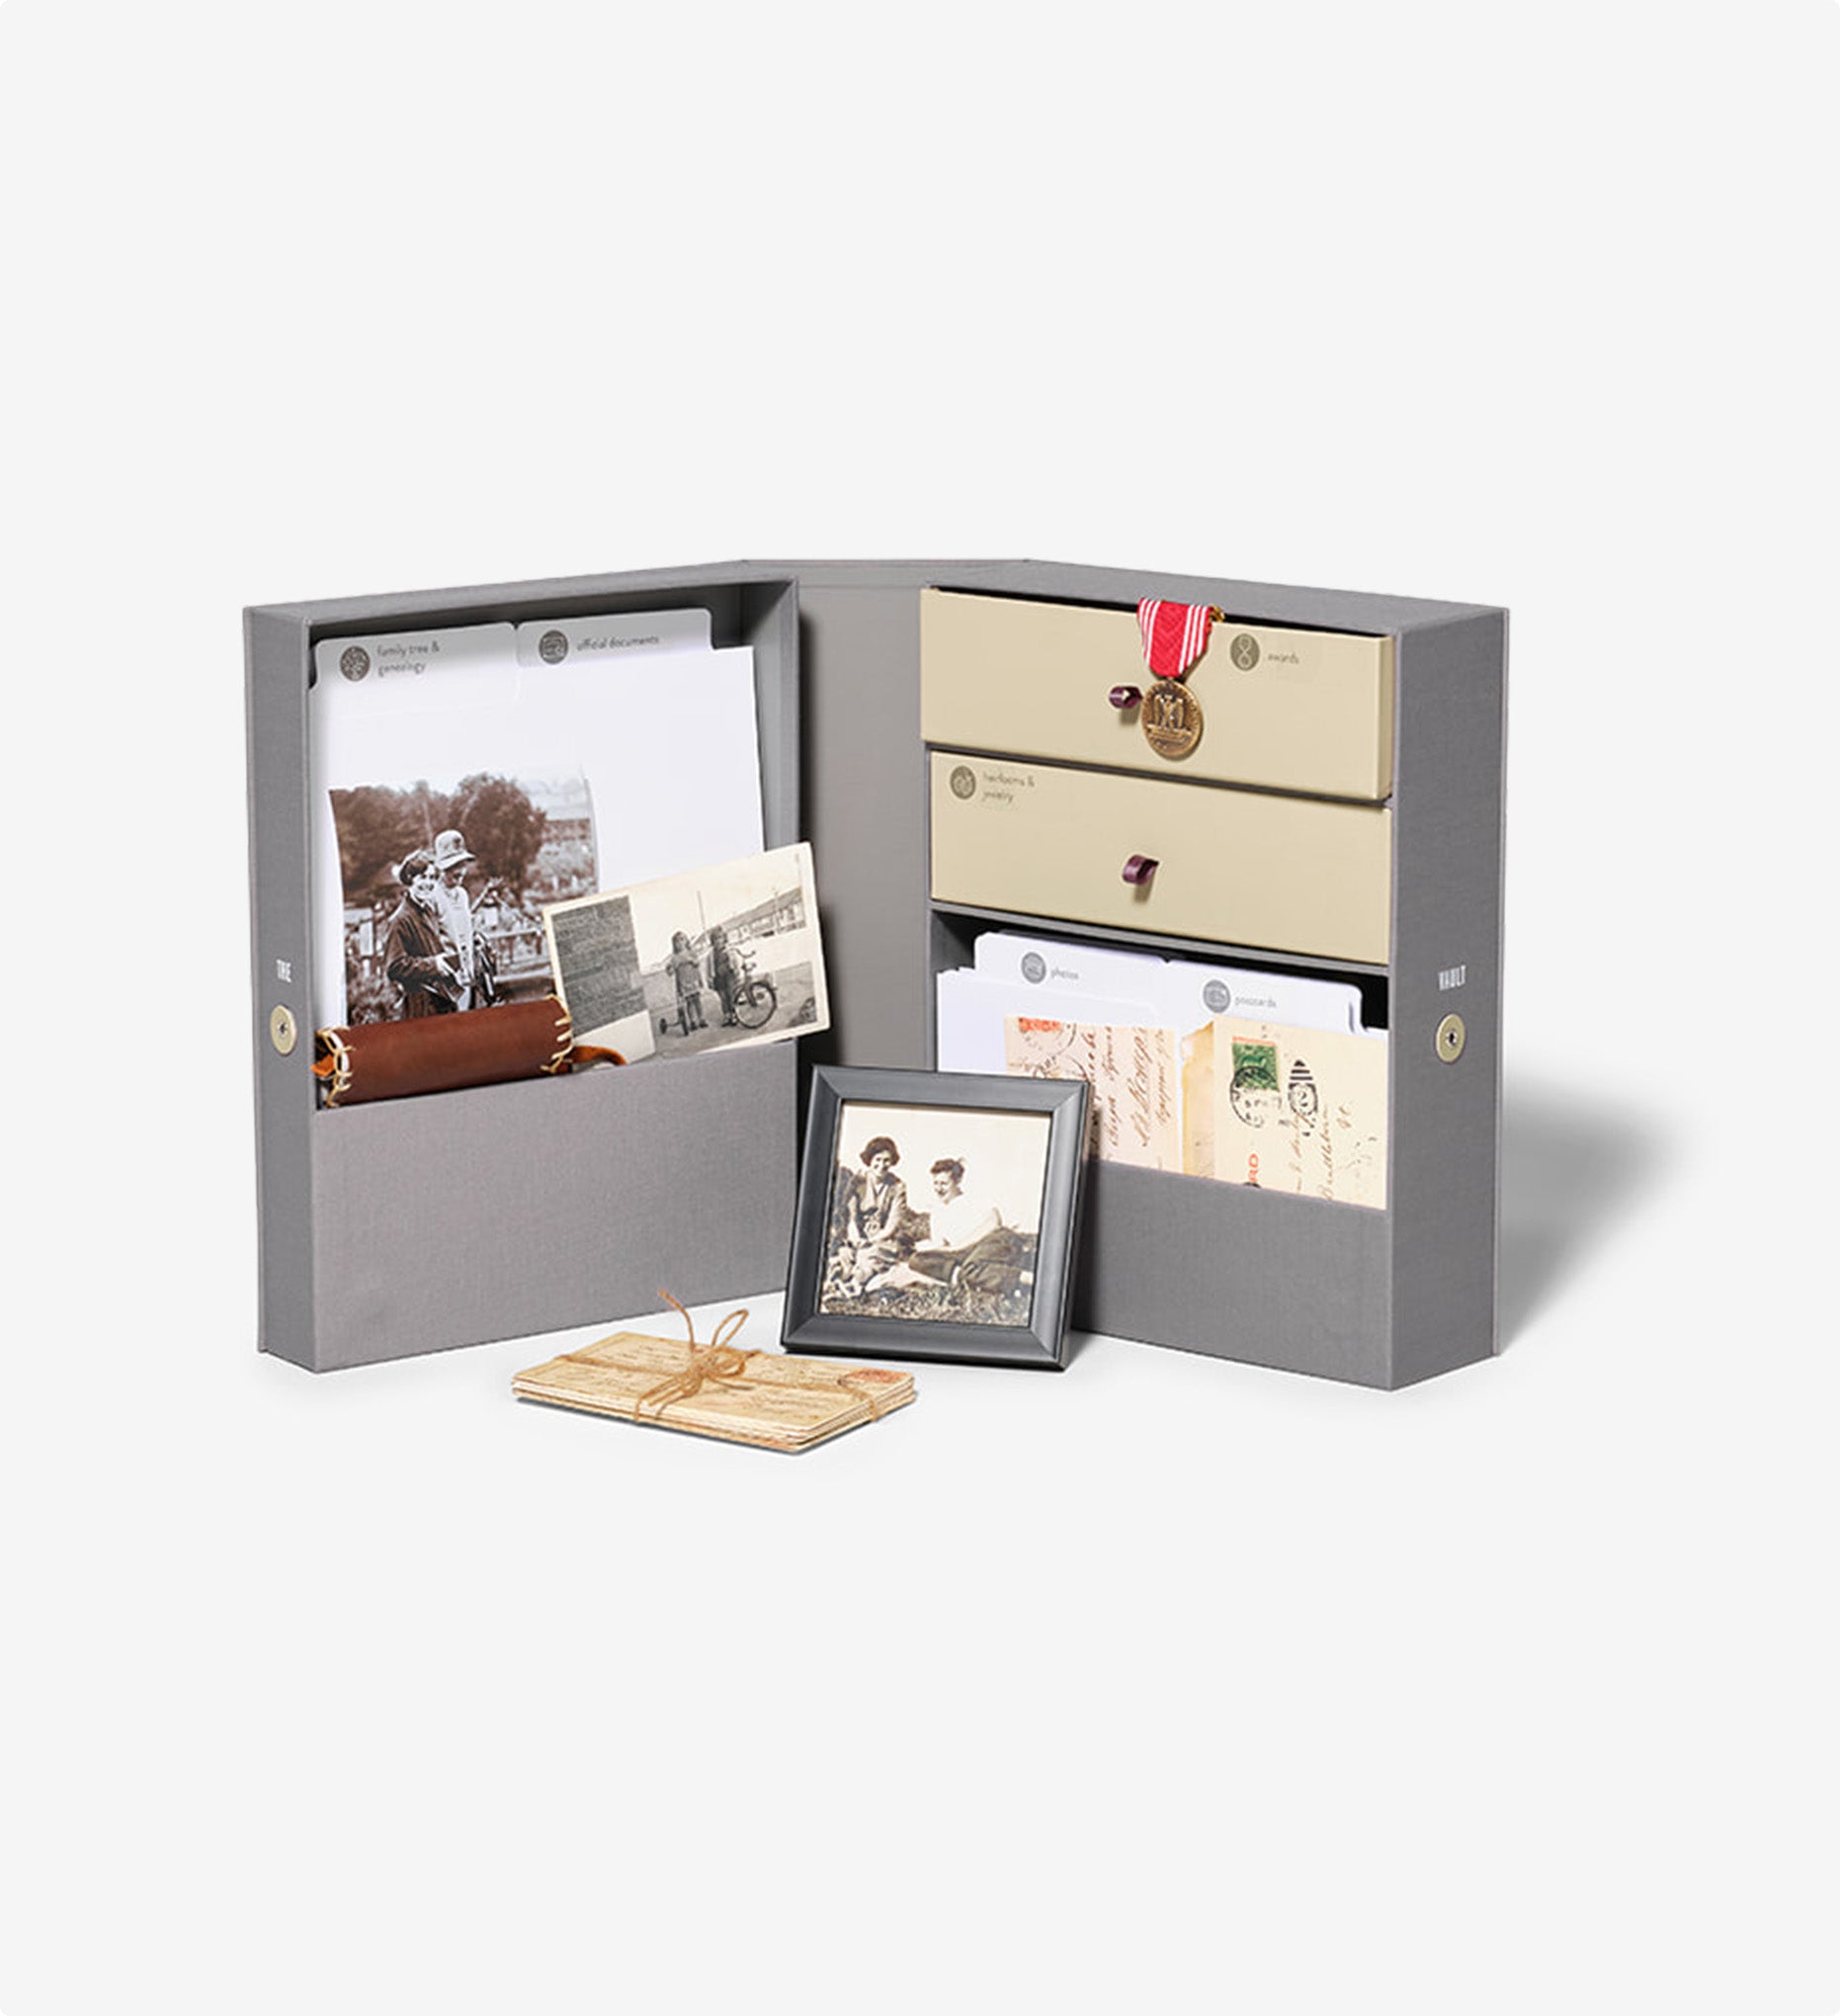 Open slate family heritage vault keepsake box with props.